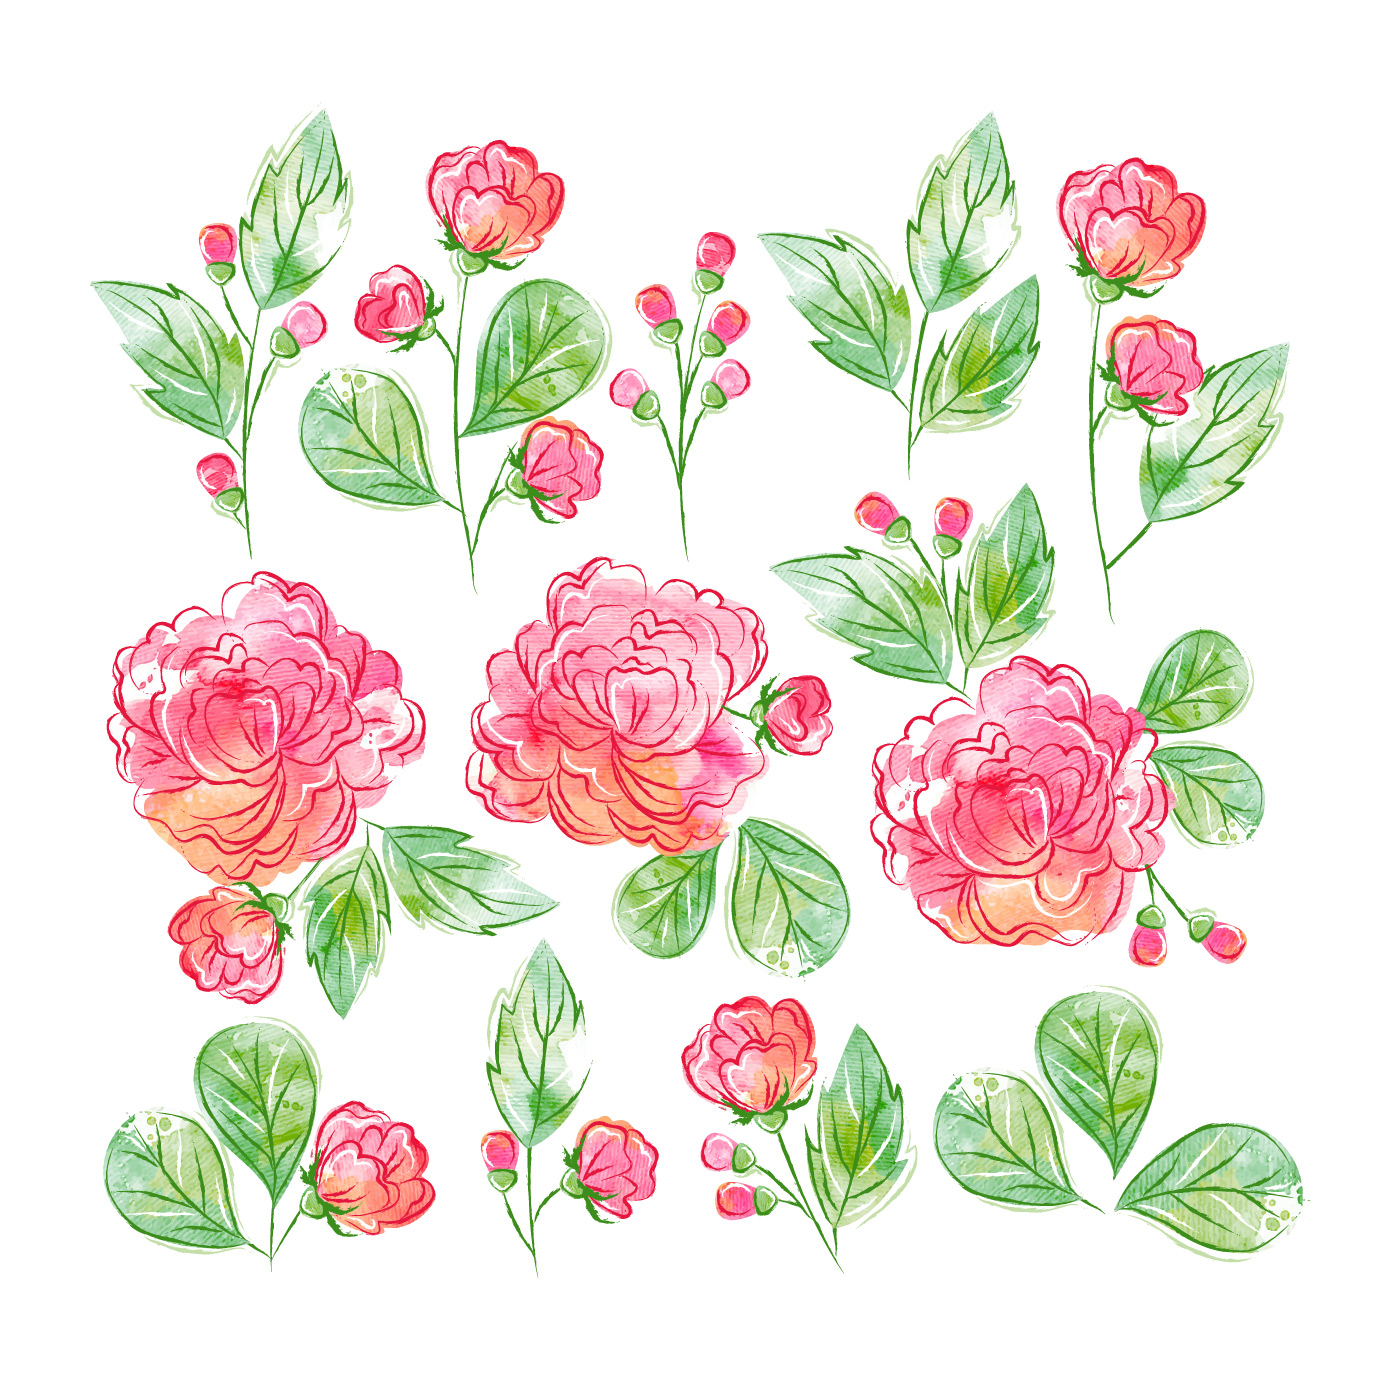 Download Watercolor Floral Set - Download Free Vectors, Clipart ...